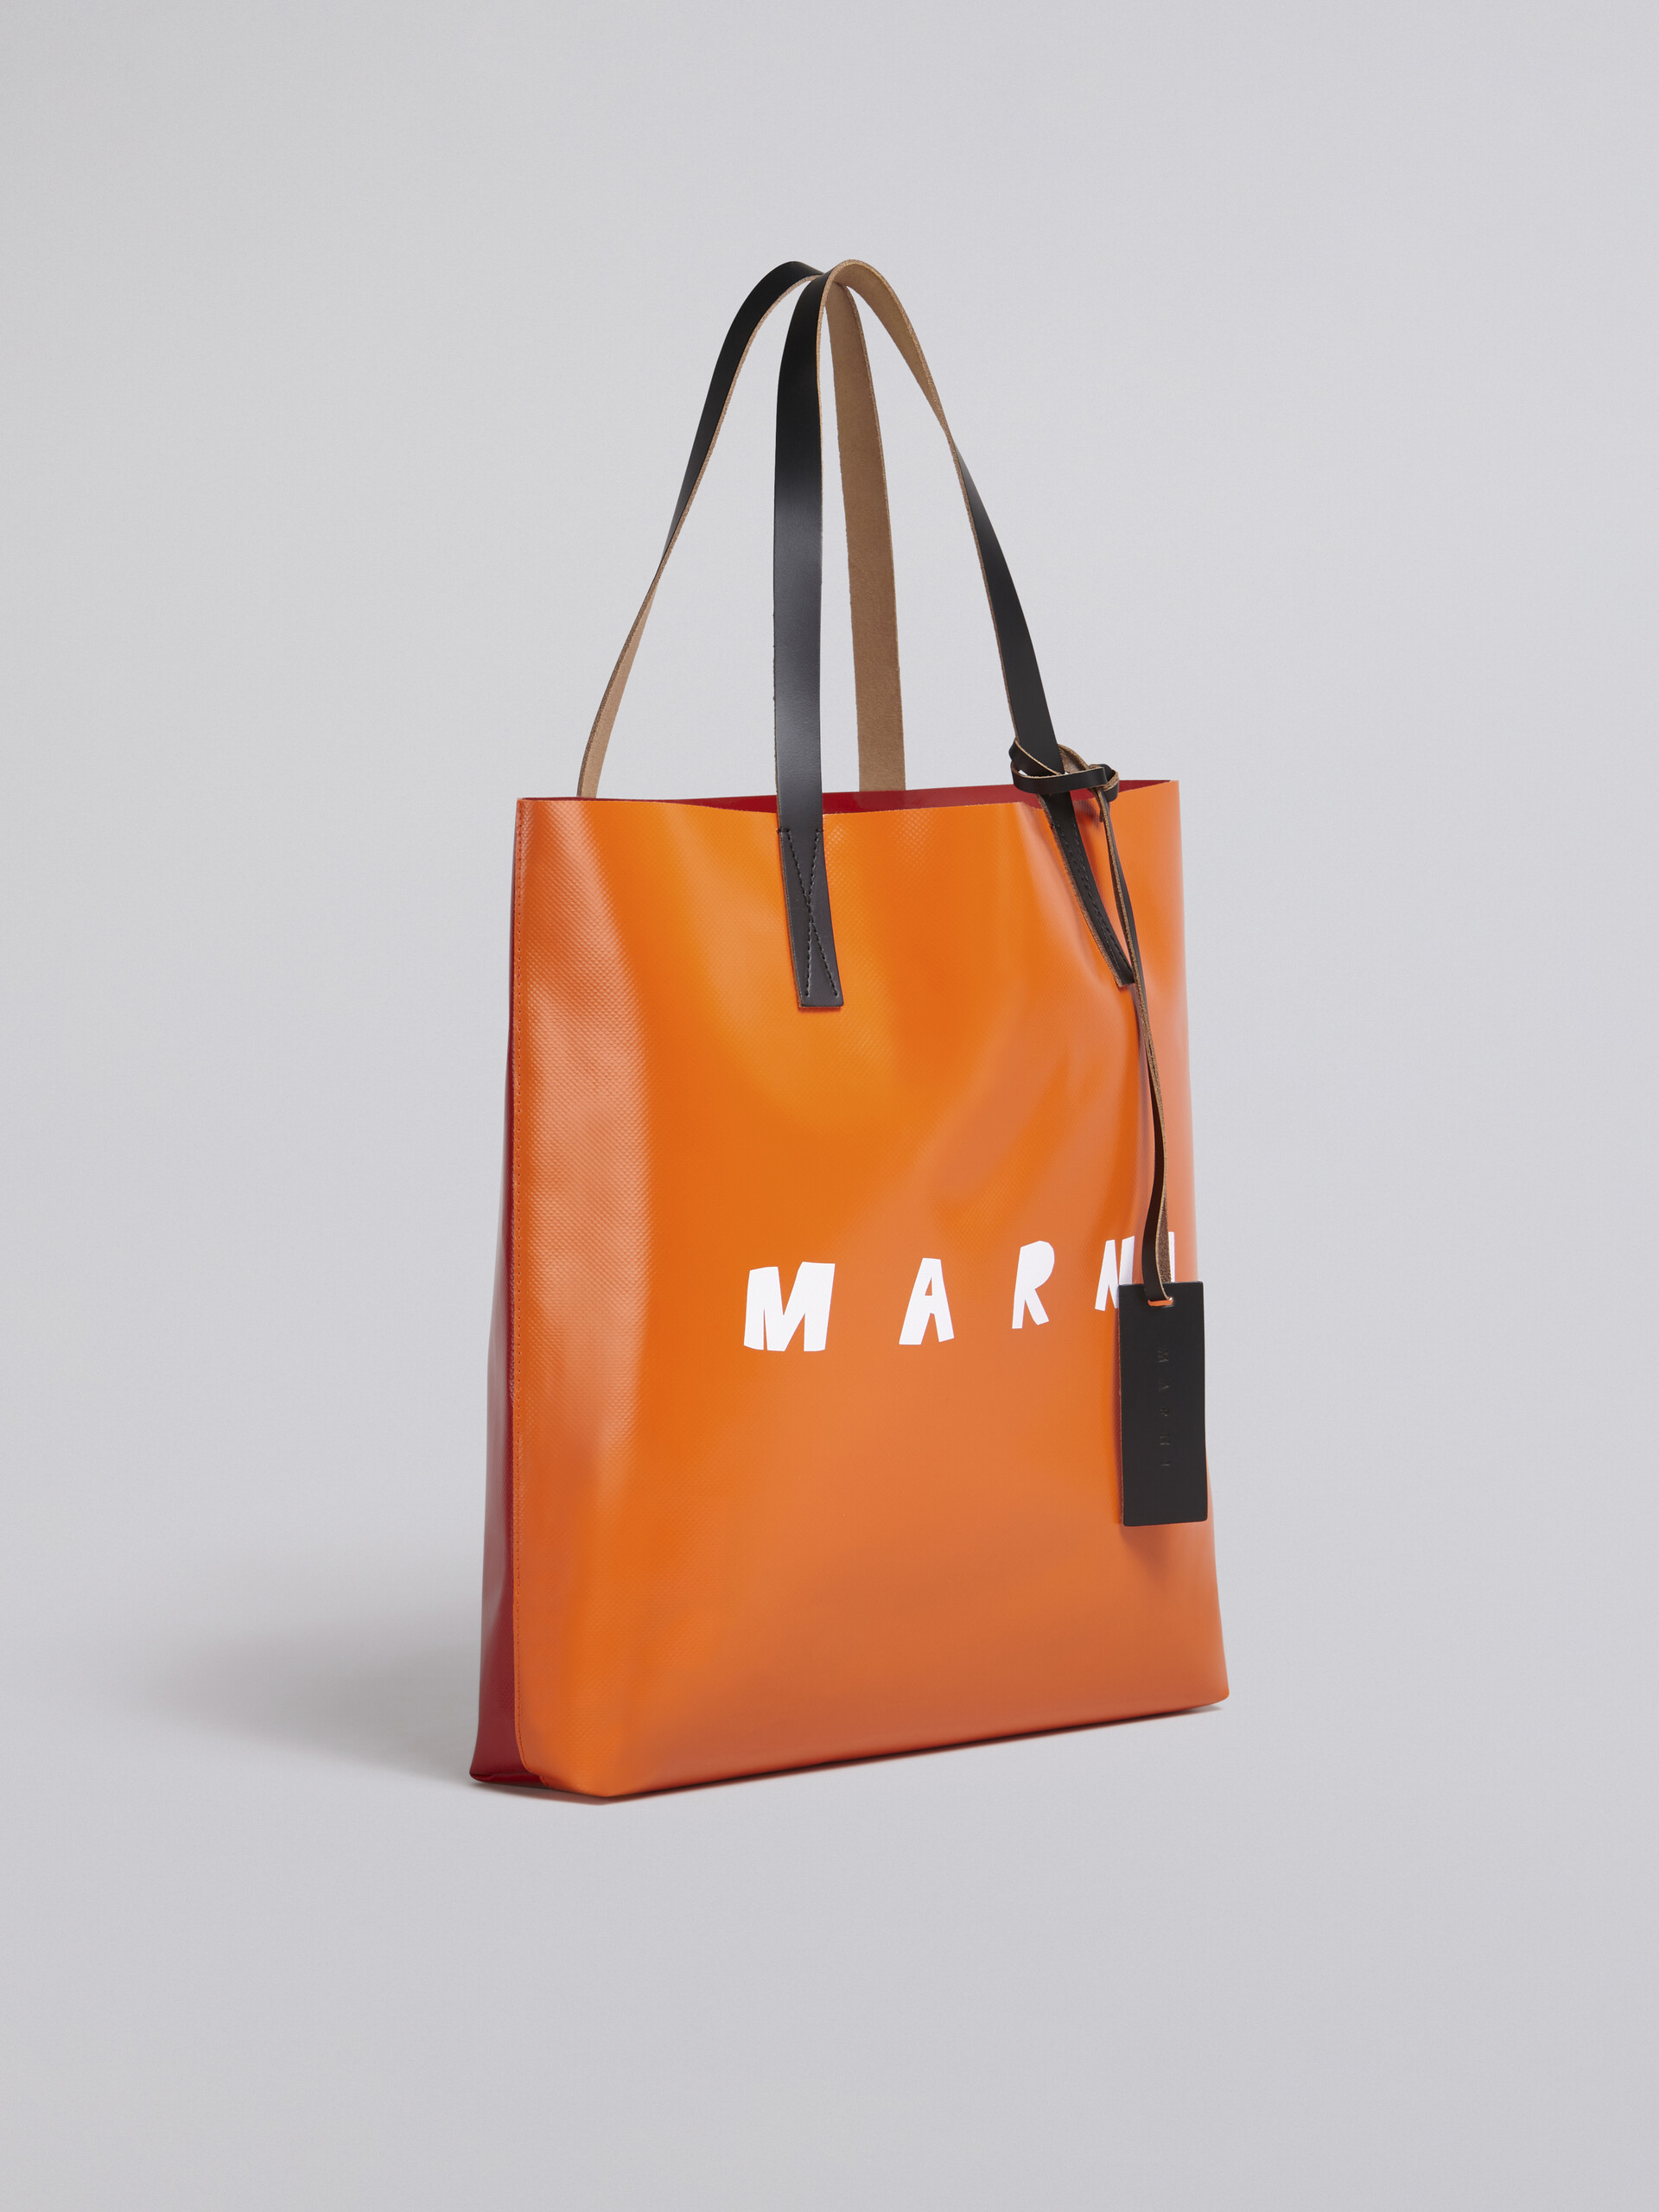 Borsa shopping in PVC con manici in pelle e logo Marni fuxia e arancione - Borse shopping - Image 4